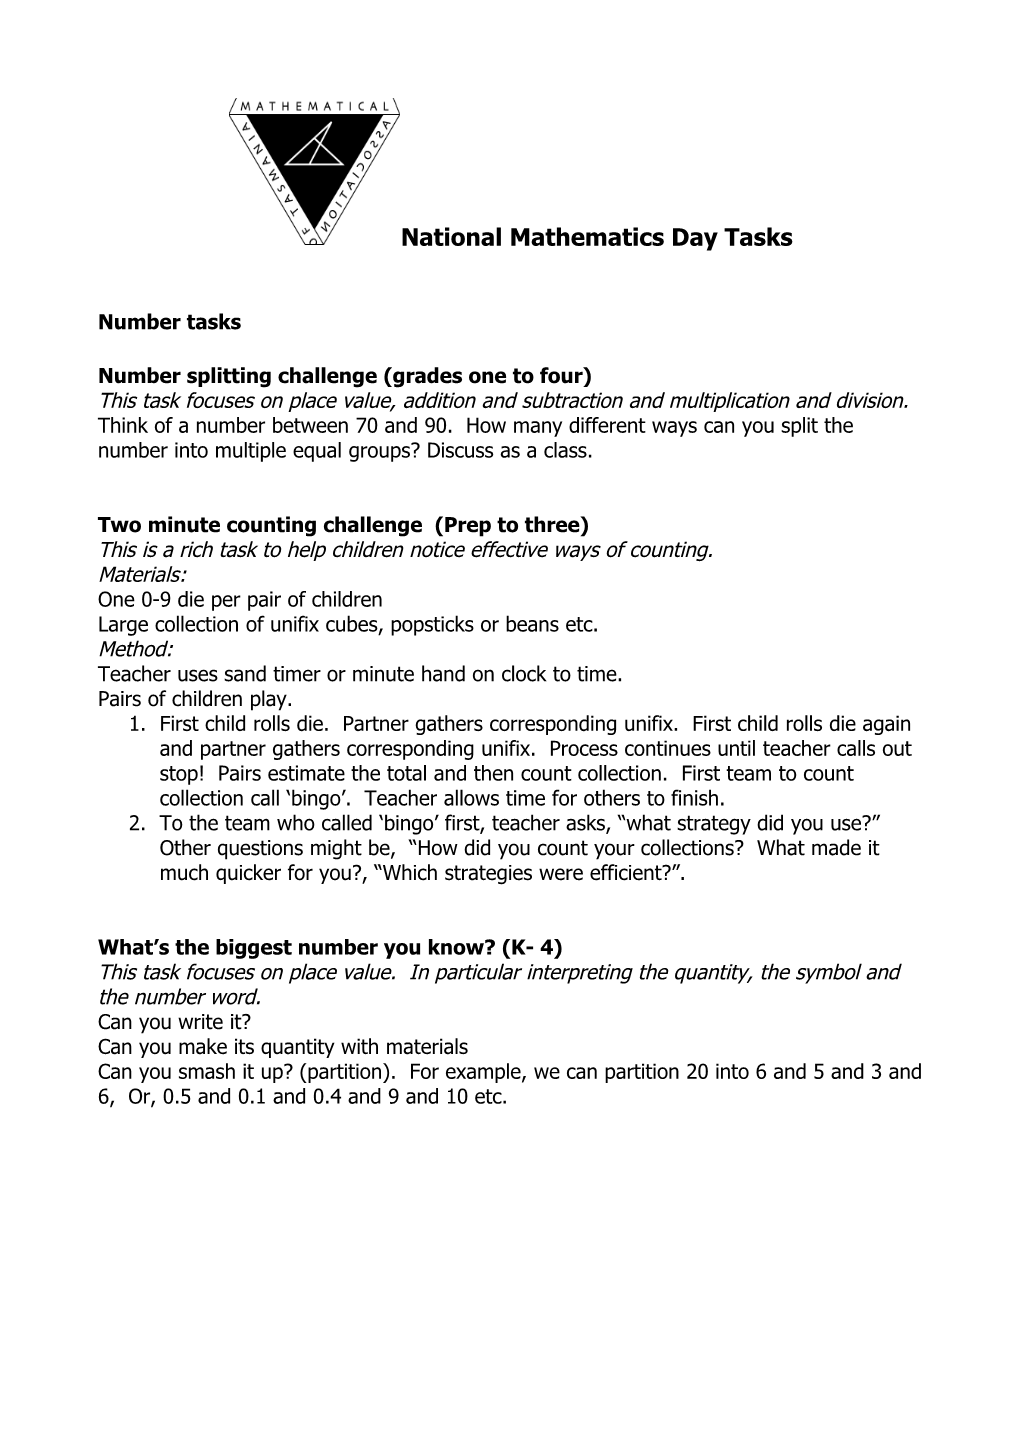 National Mathematics Day Activities